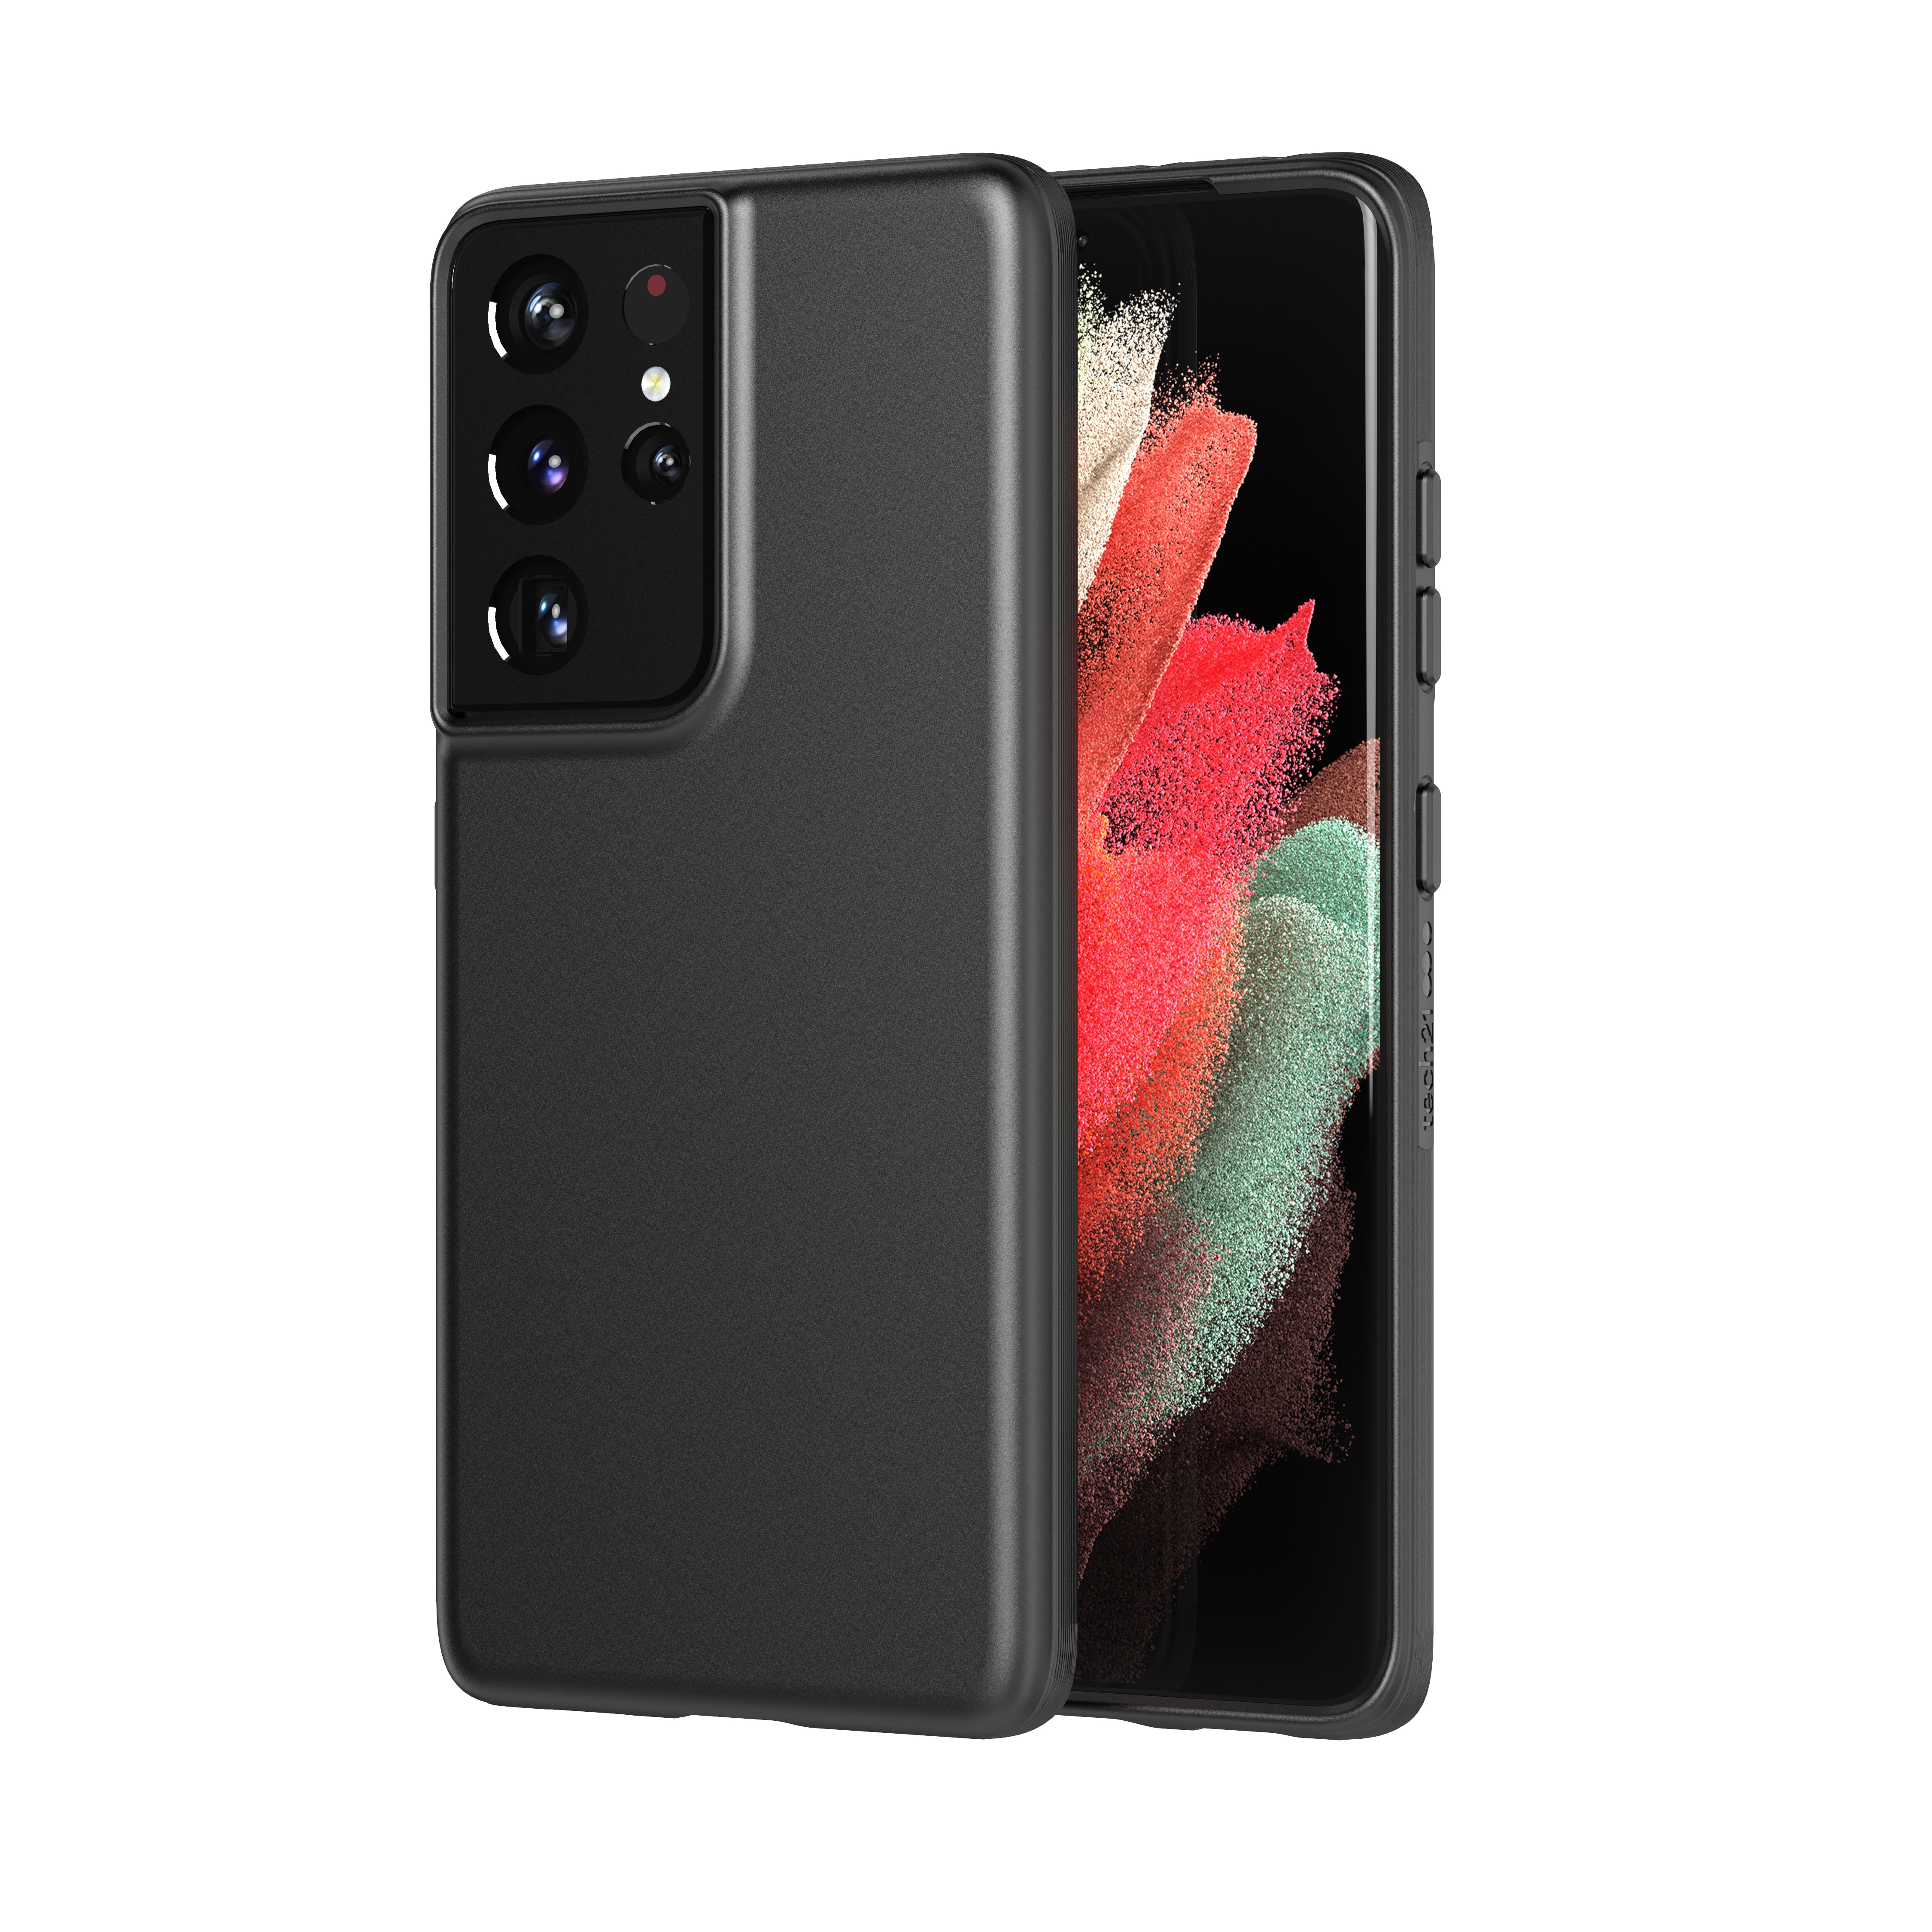 Evo Slim Case Galaxy S21 Ultra Charcoal Black